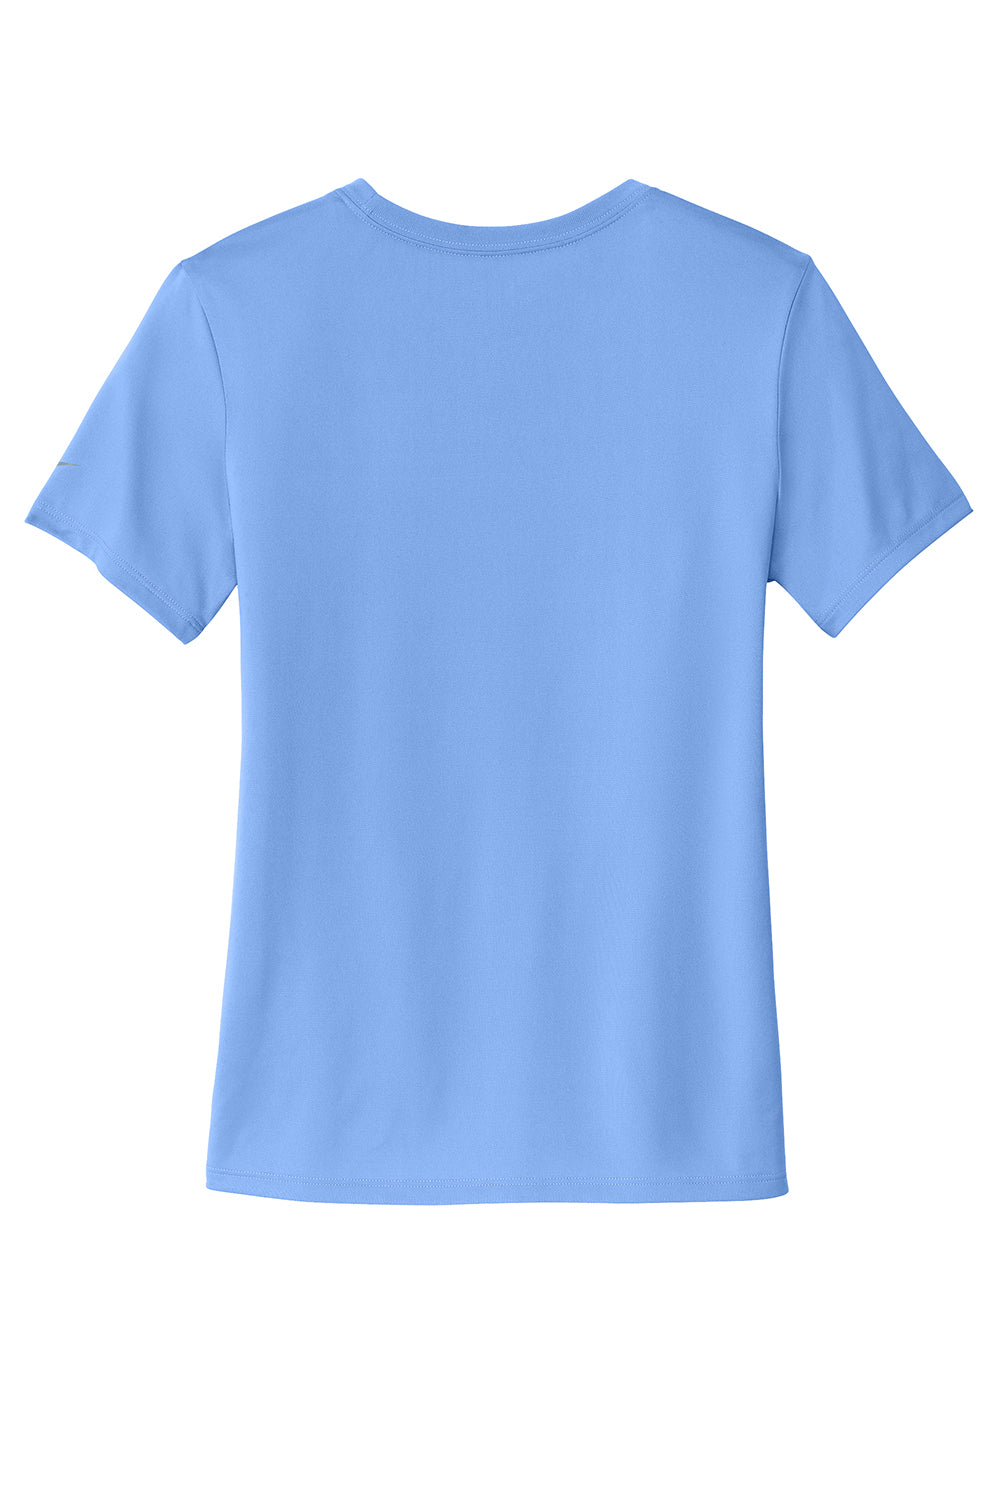 Nike NKDX8734 Womens rLegend Dri-Fit Moisture Wicking Short Sleeve Crewneck T-Shirt Valor Blue Flat Back